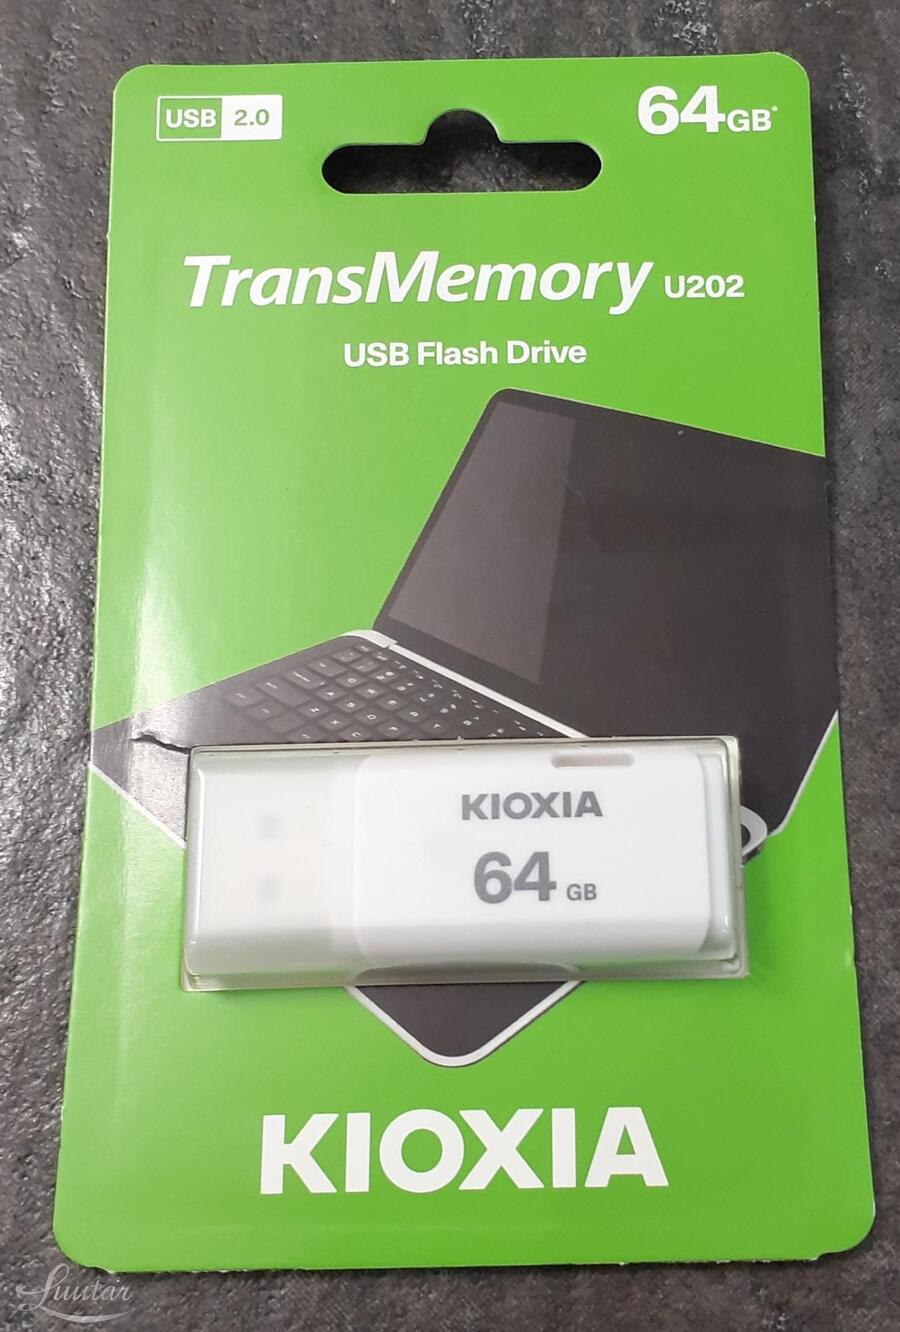 Mälupulk KIOXIA 64GB! UUS!